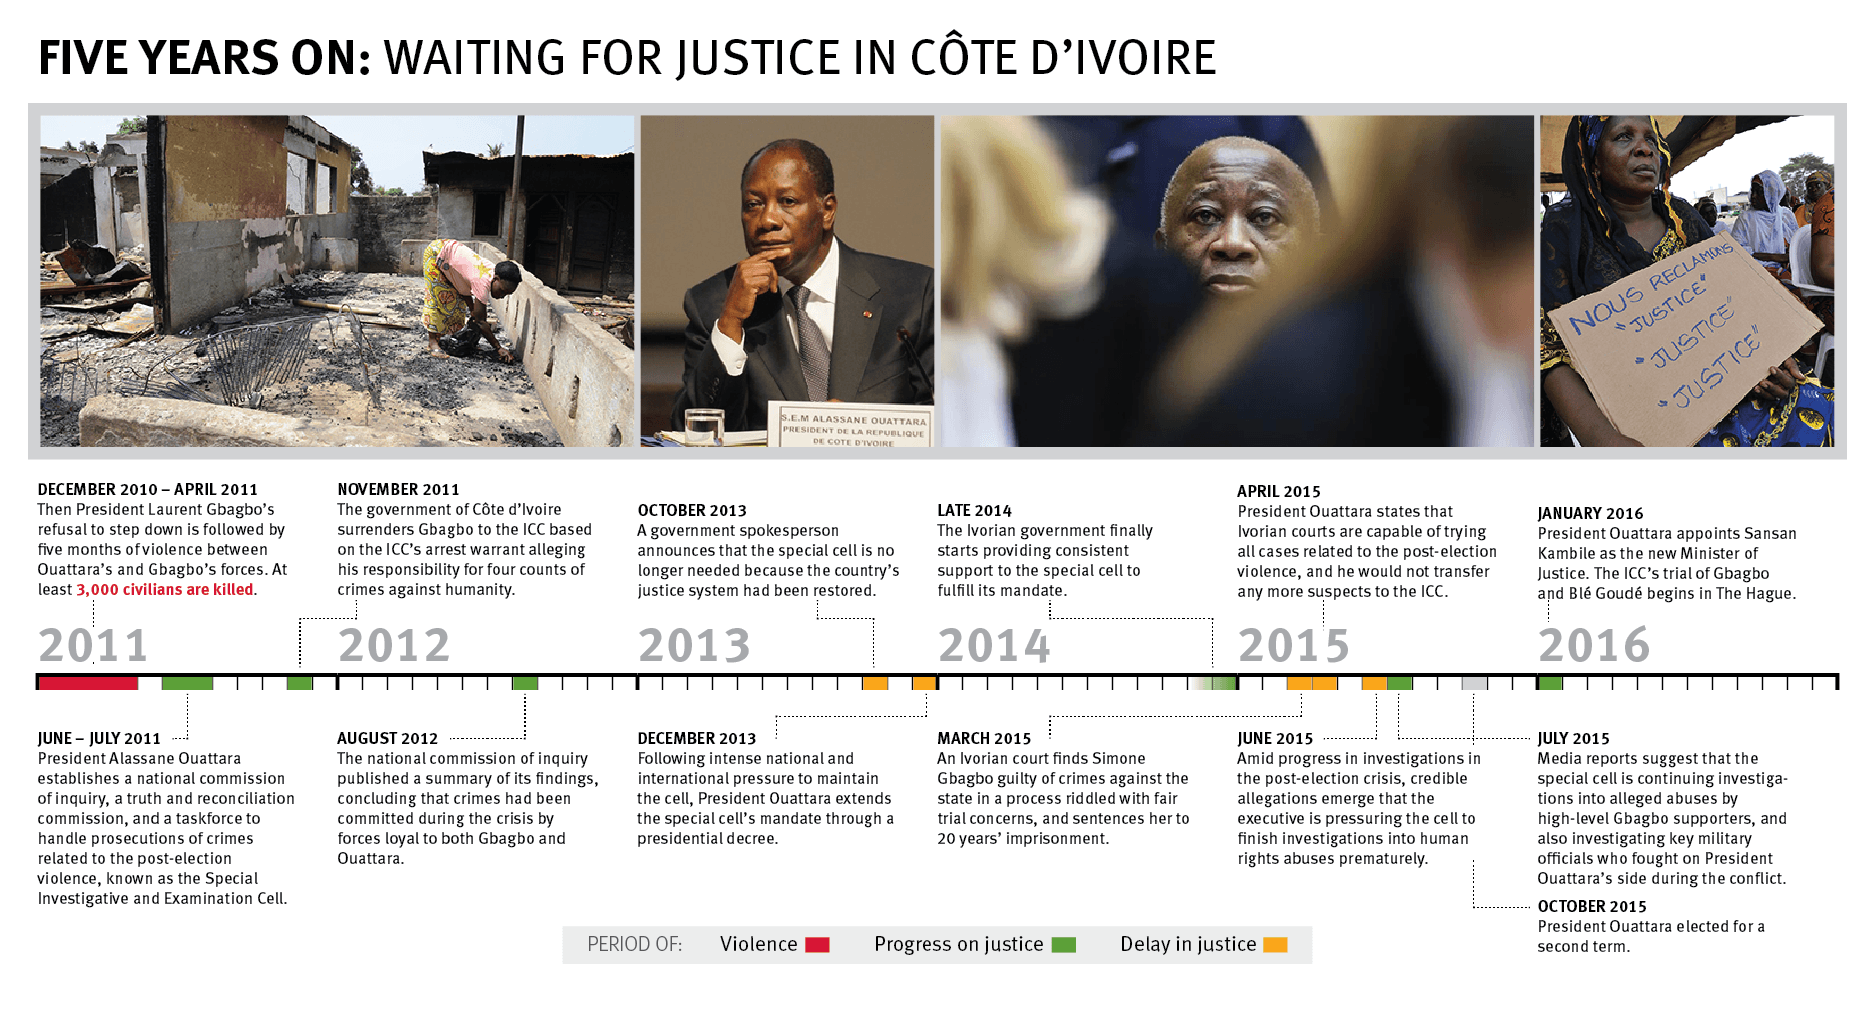 Cote d'Ivoire timeline of justice